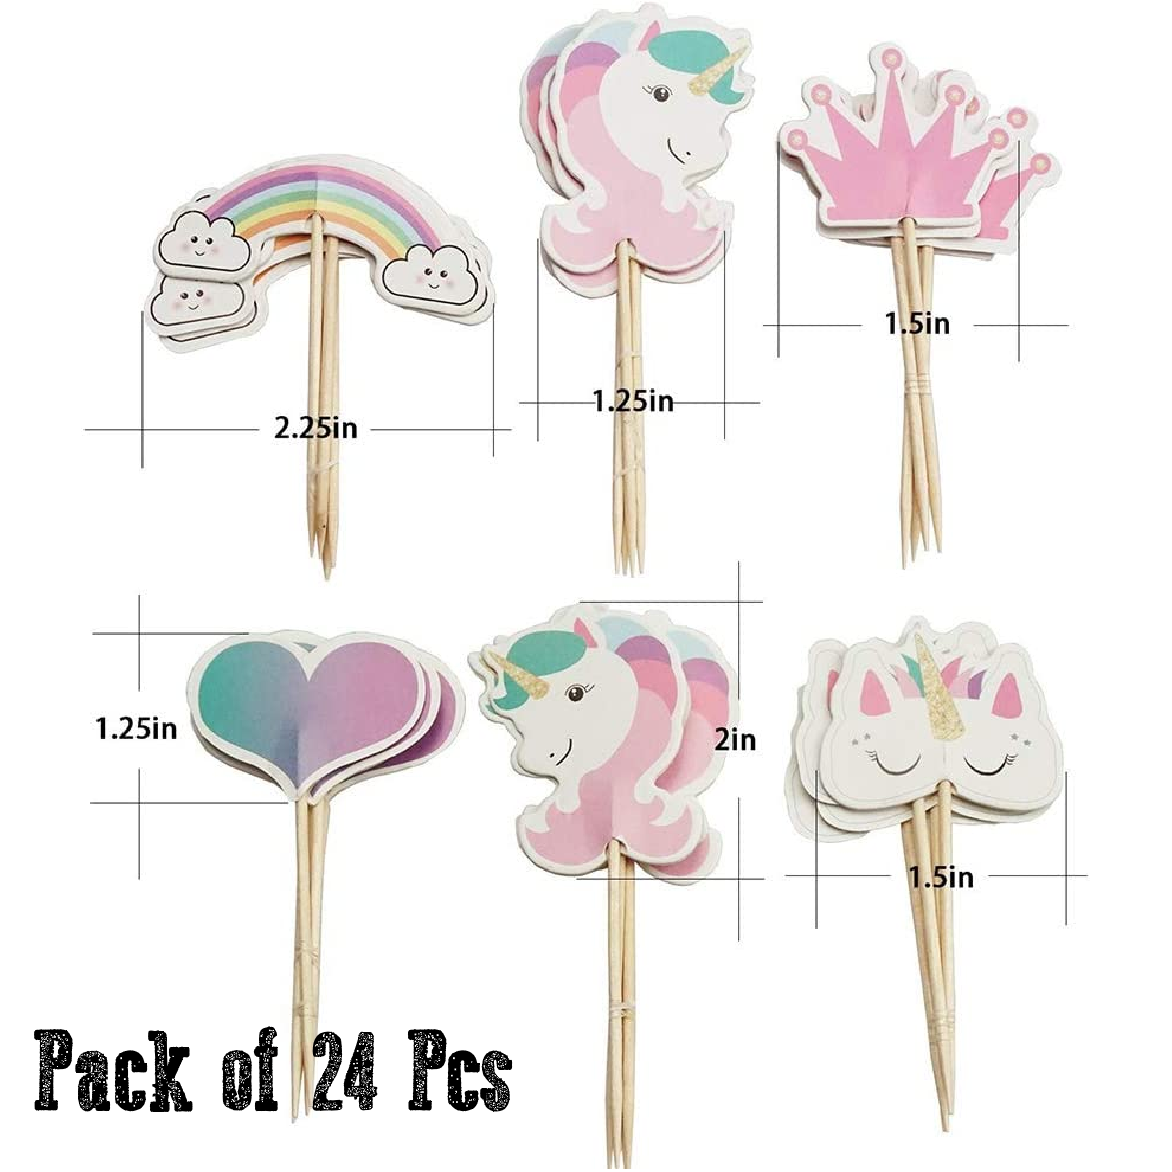 Cupcake Toppers/ Cake Decoration - Rainbows & Unicorns - Set of 24pcs